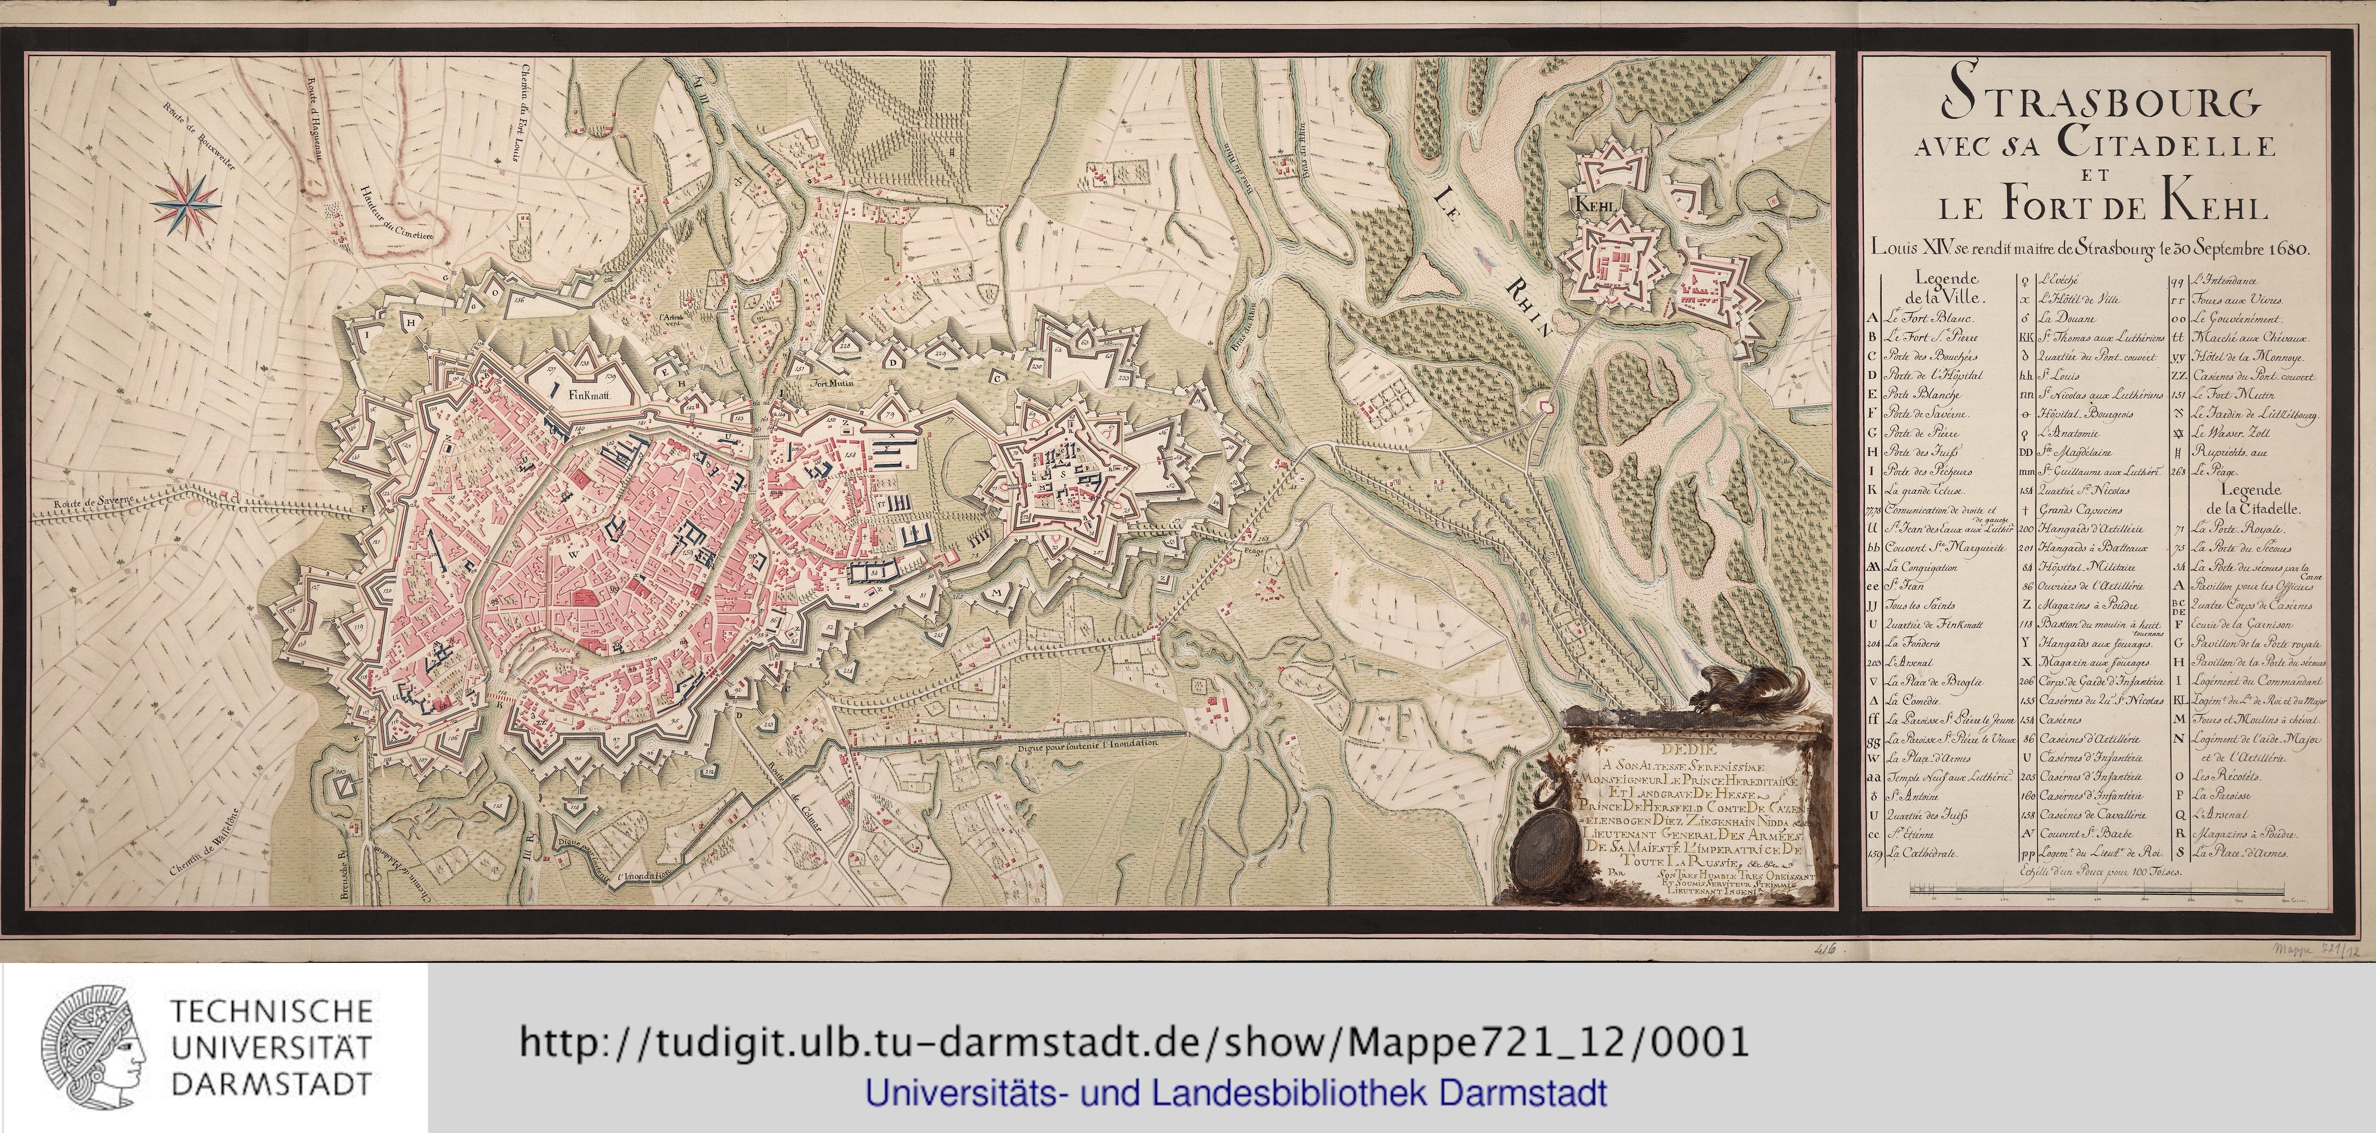 Mappe721_12_0001_strasbourg_1680.jpg